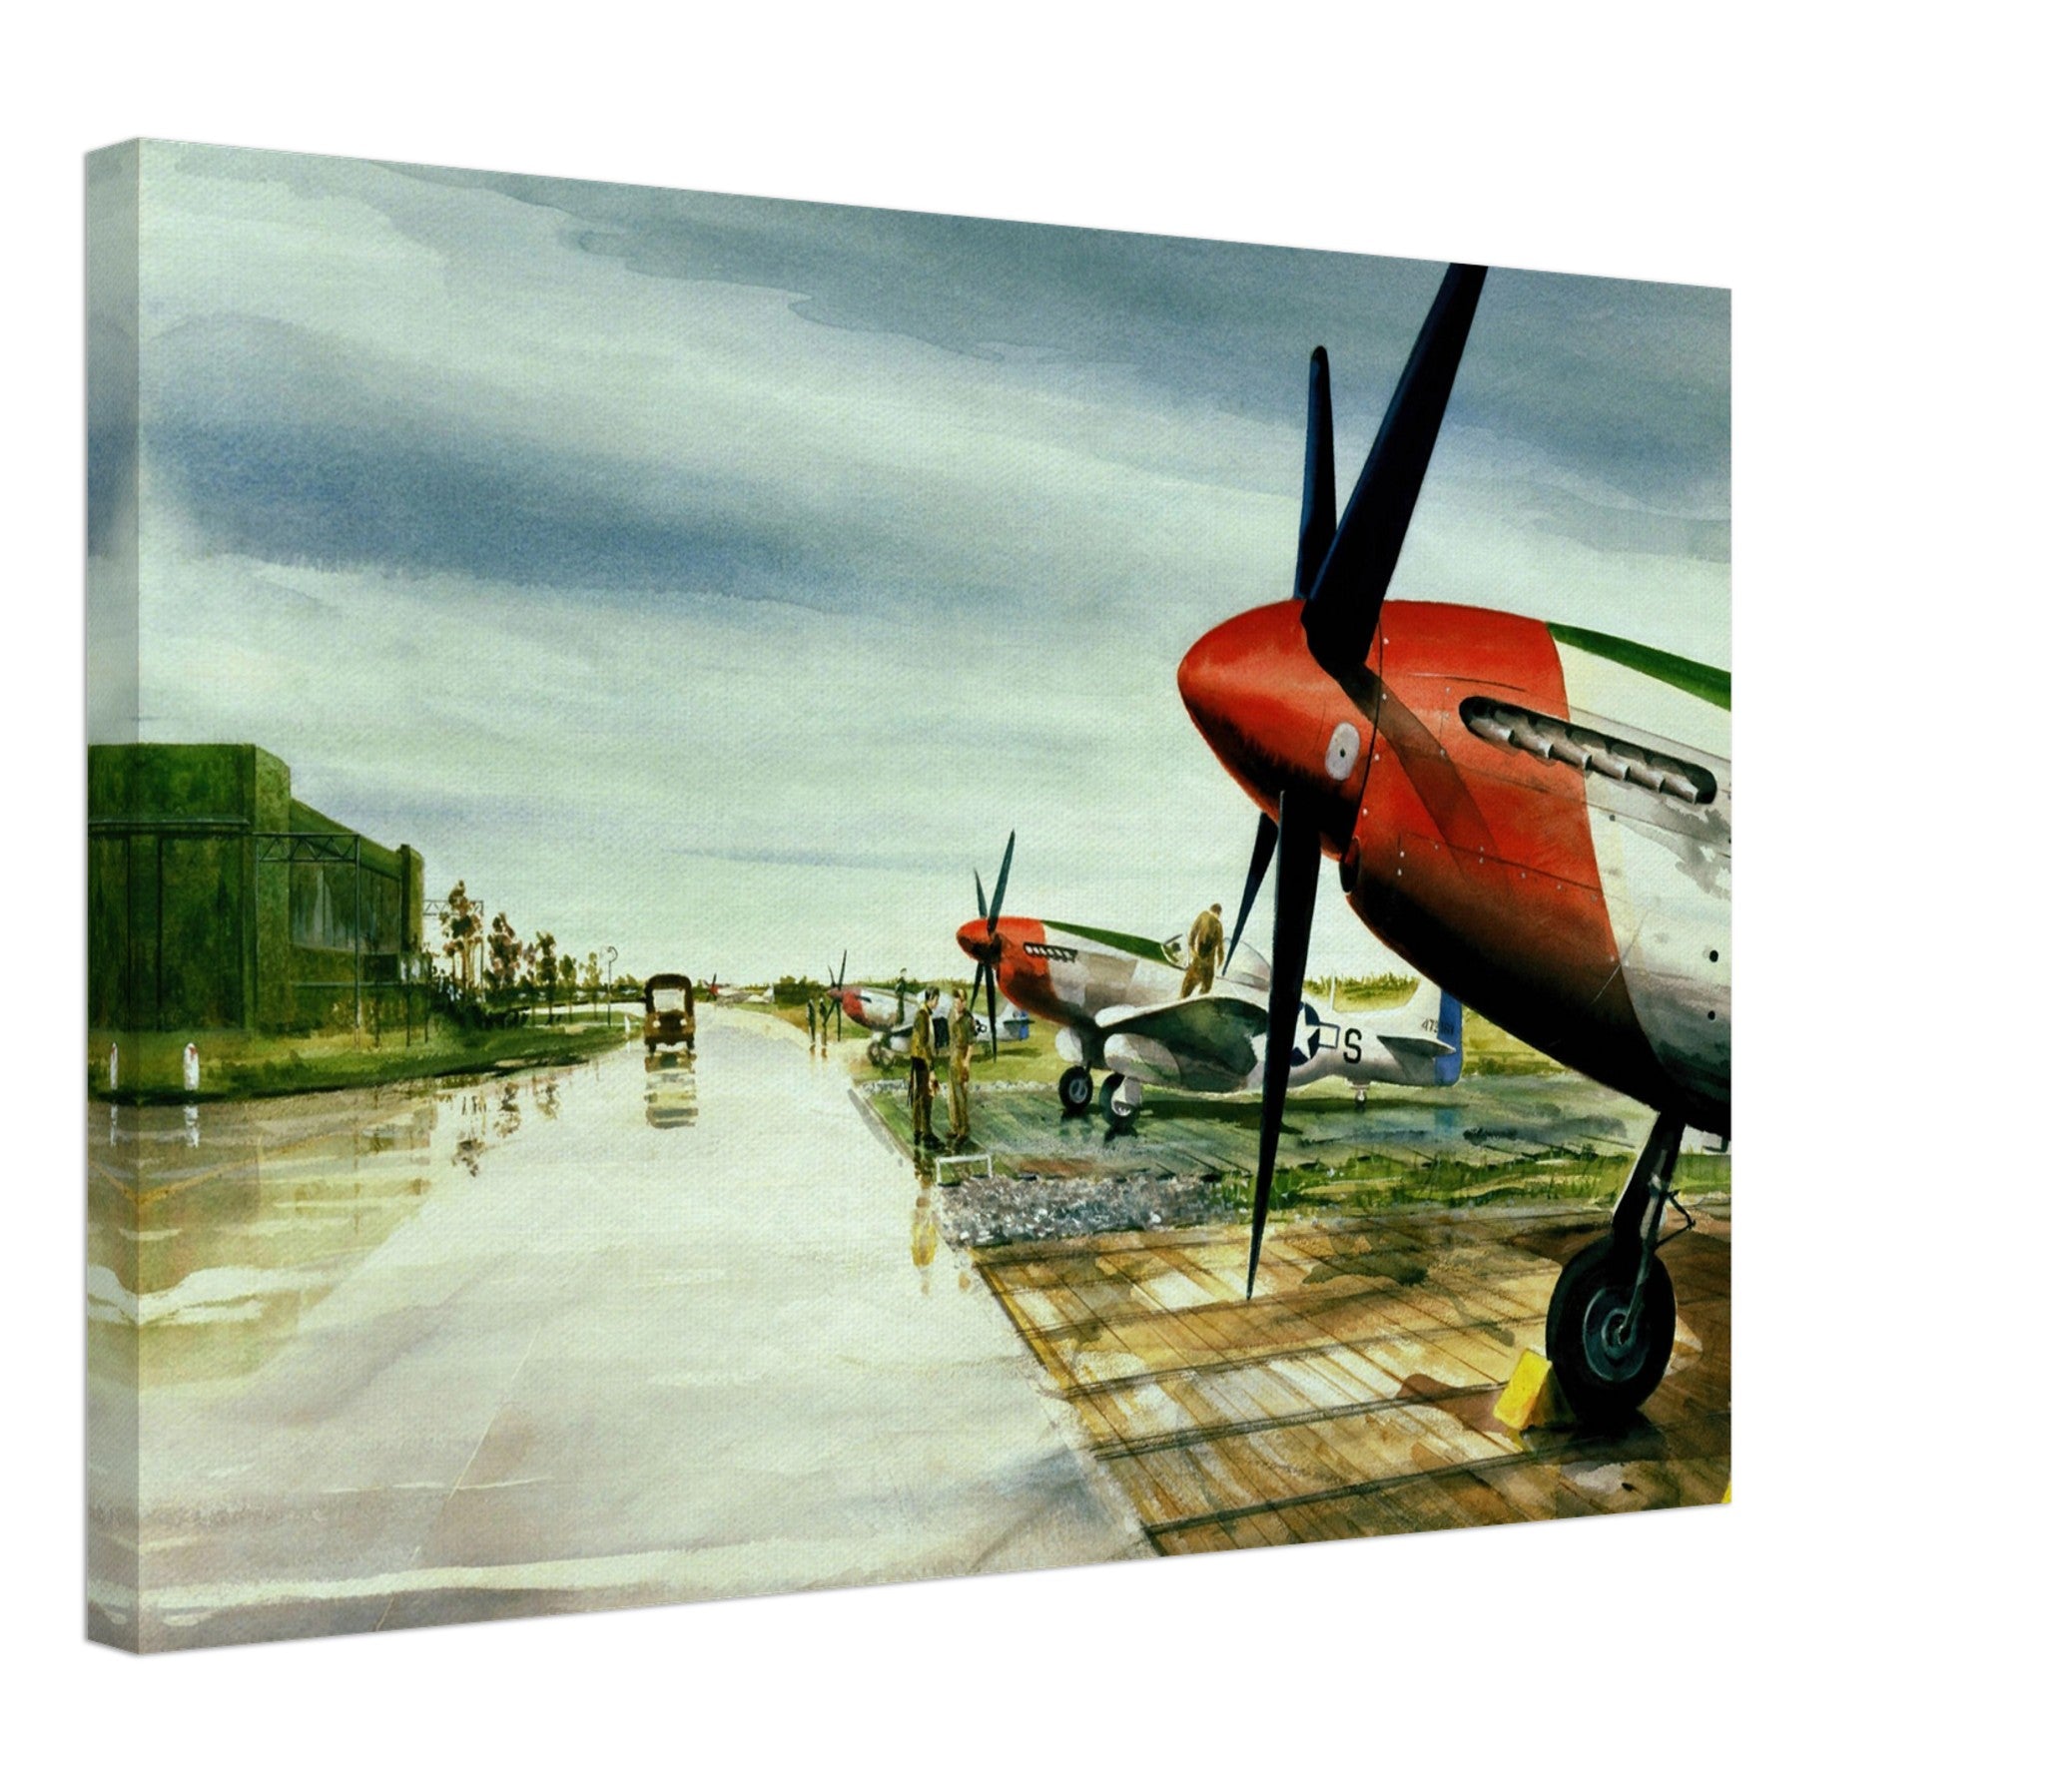 Deben Airfield Flight Line Canvas - I Love a Hangar